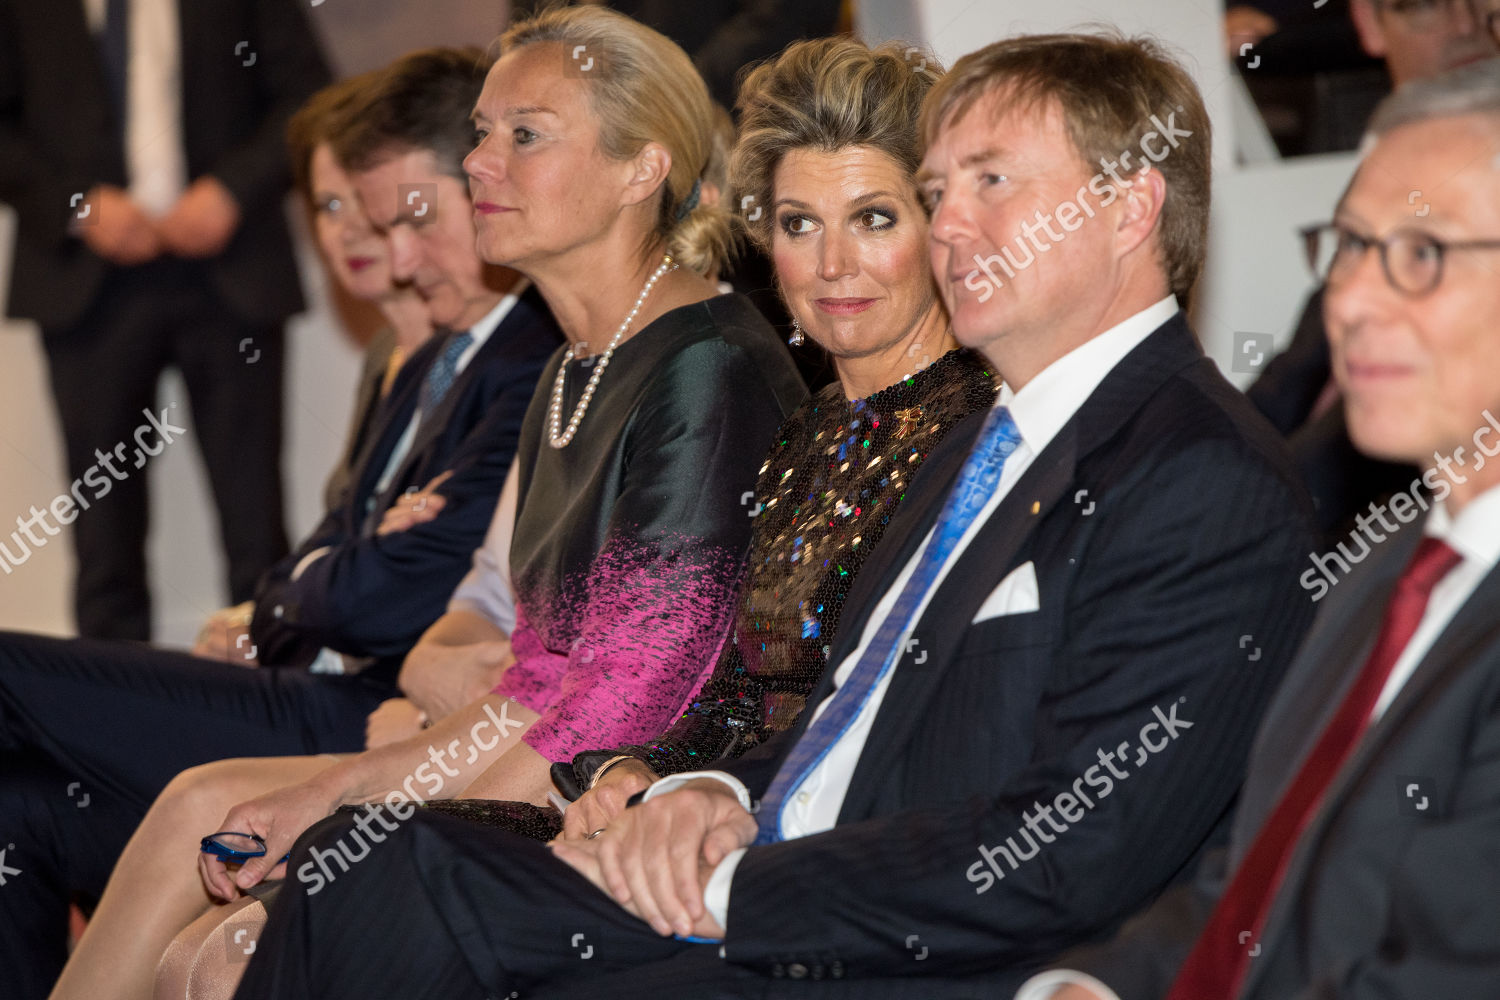 dutch-royals-visit-to-bremen-germany-shutterstock-editorial-10143597da.jpg